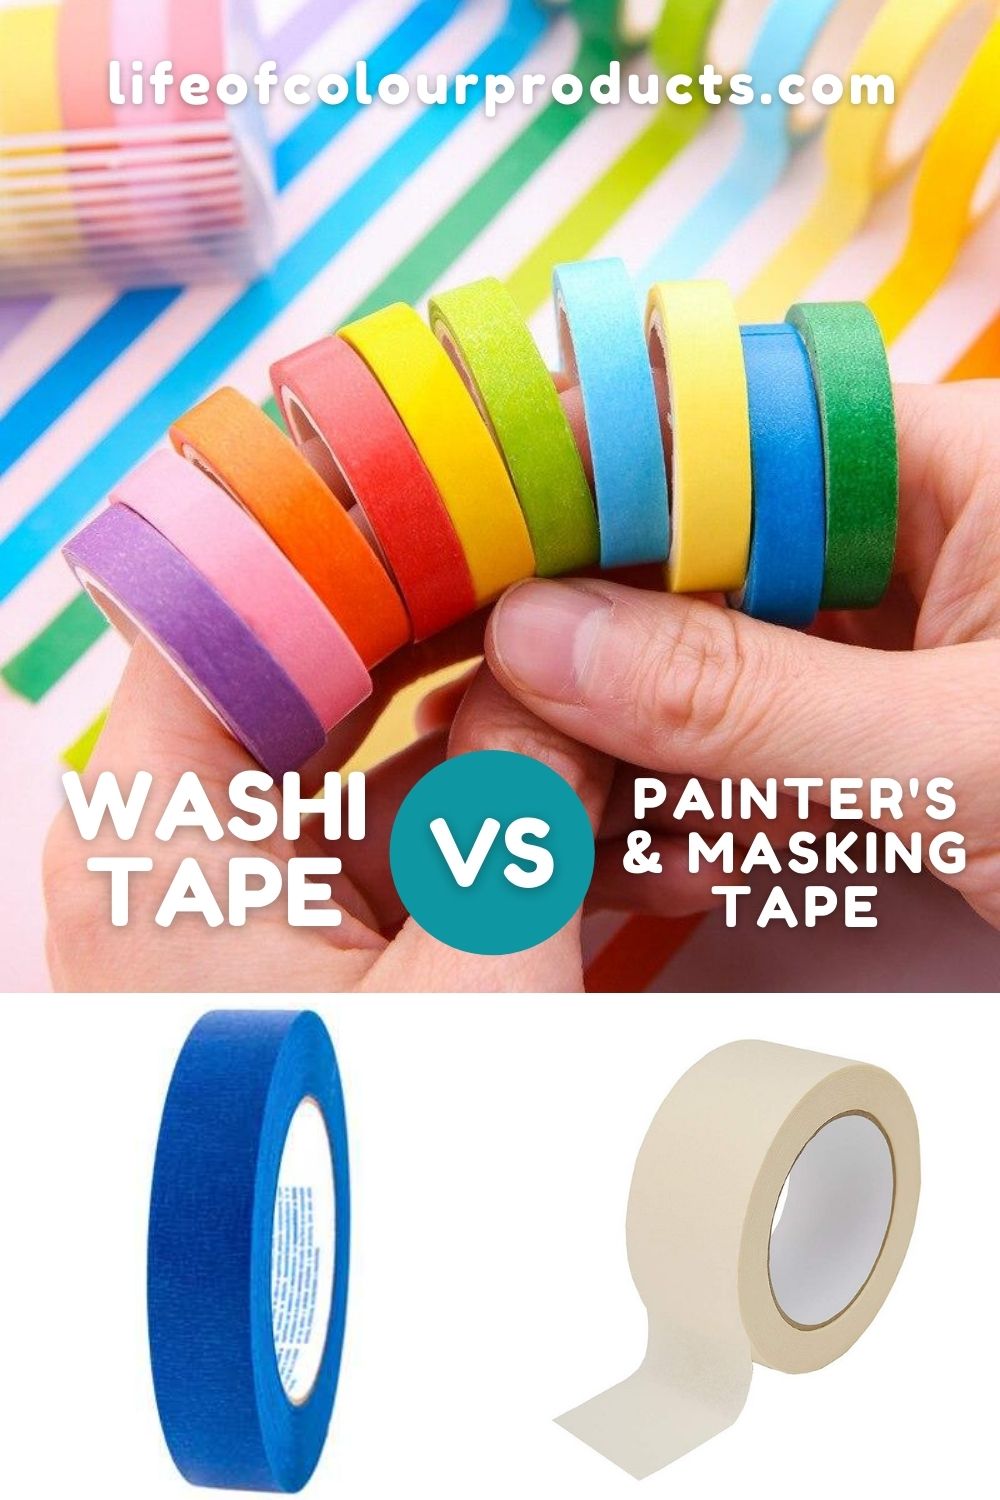 Washi tape vs masking tape and painter's tape